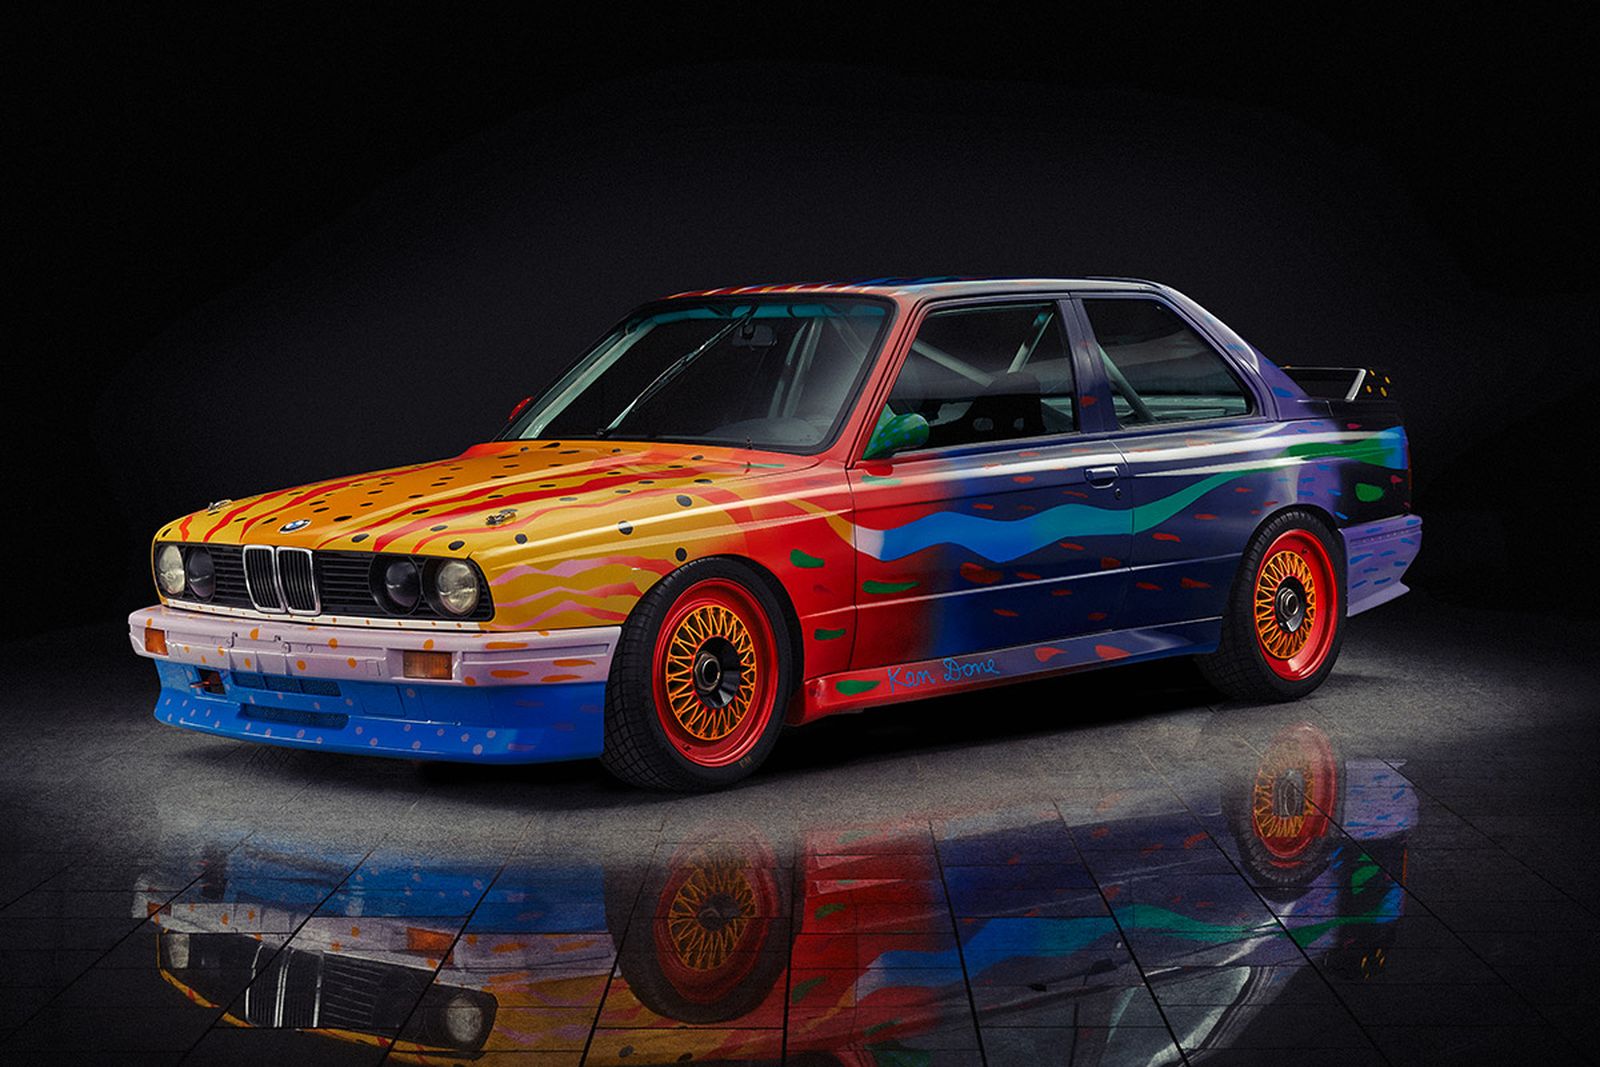 BMW Art Car 08, Ken Done, 1989